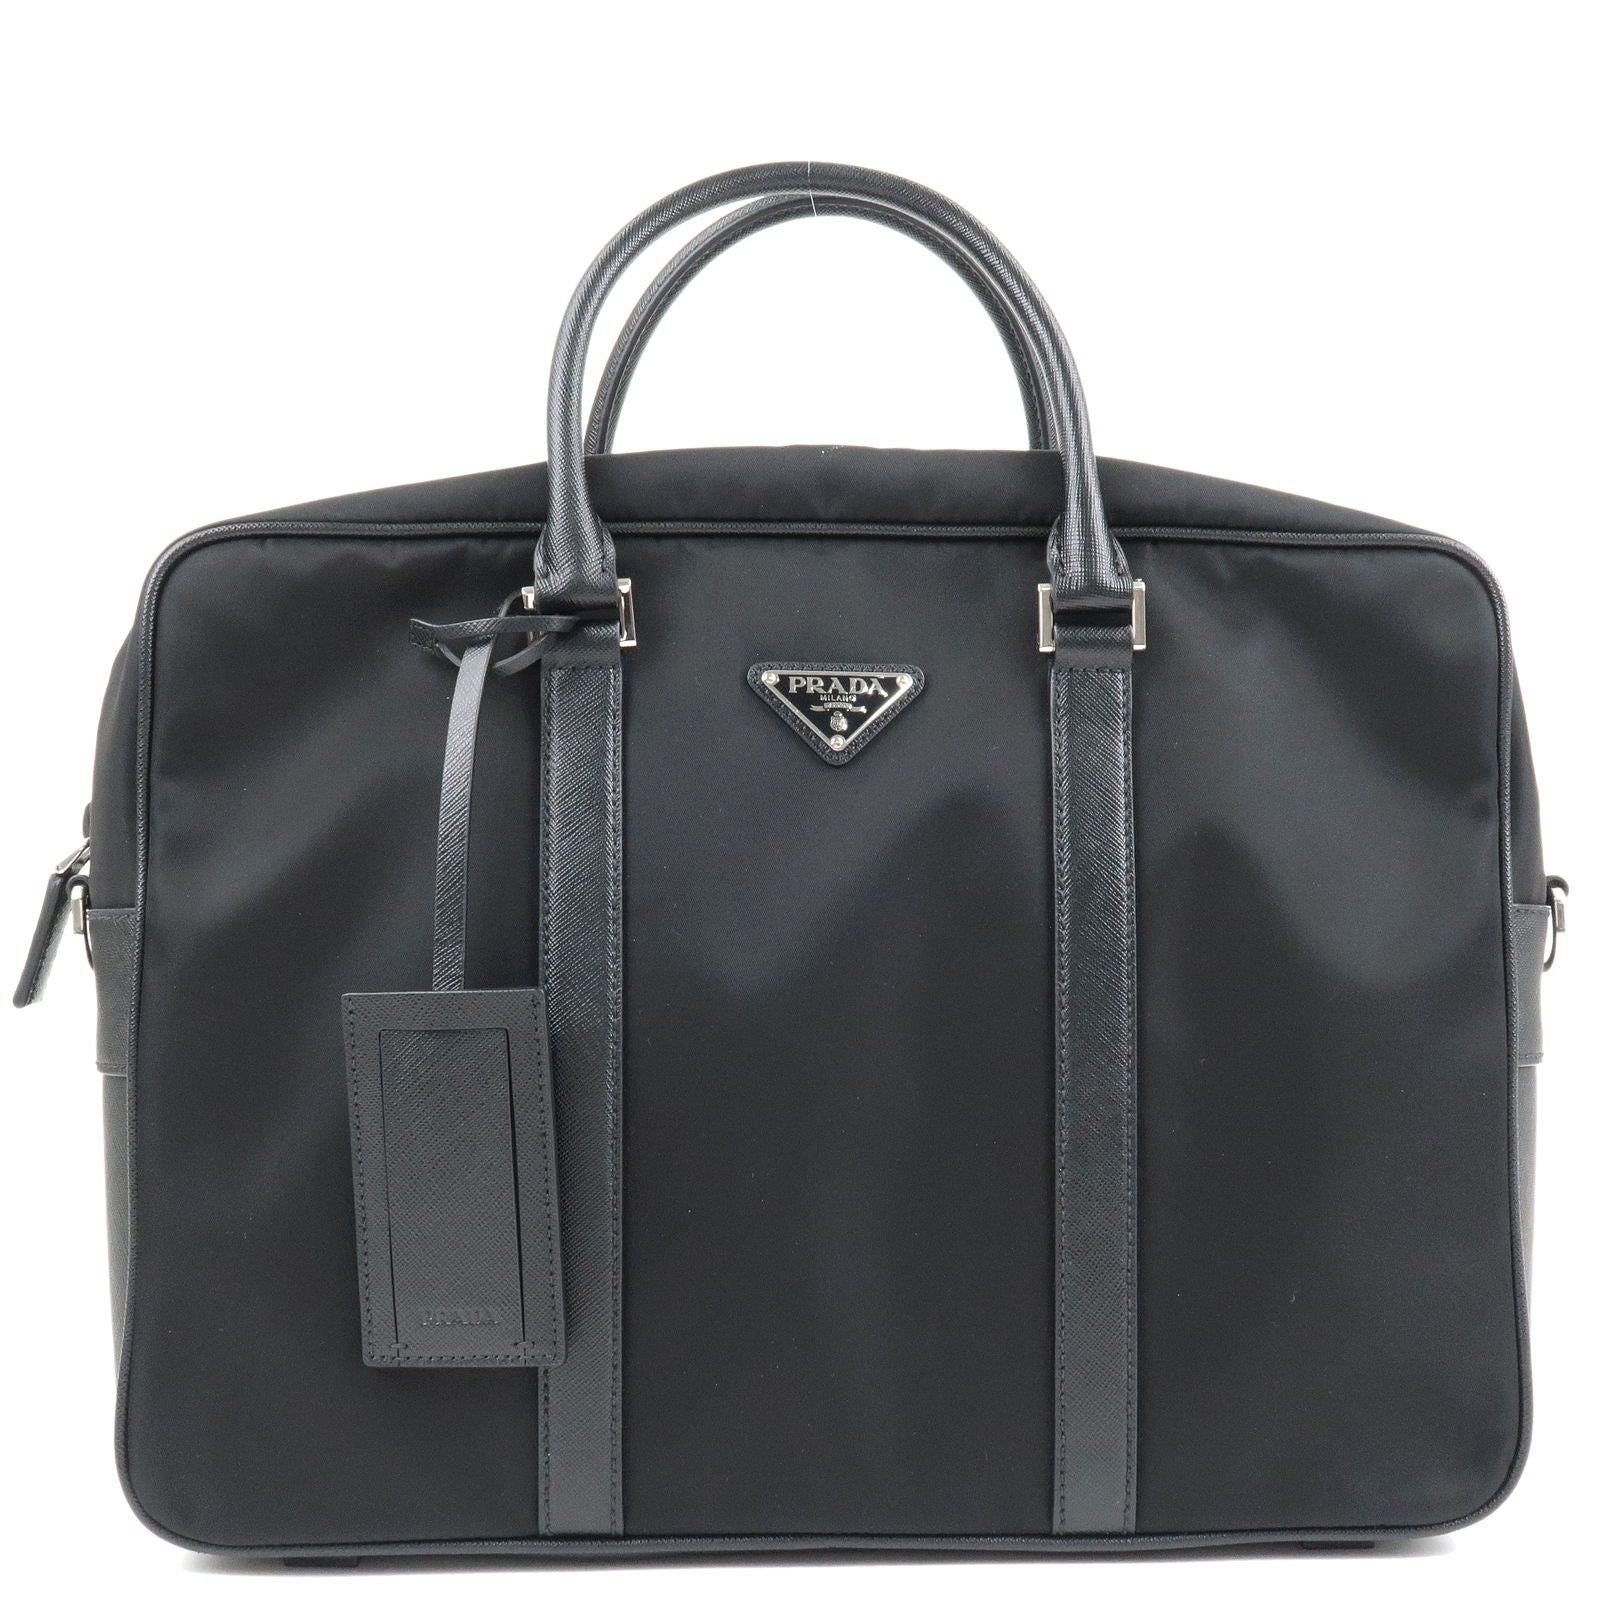 PRADA-Logo-Nylon-Leather-Business-Bag-Brief-Case-Black-2VE661